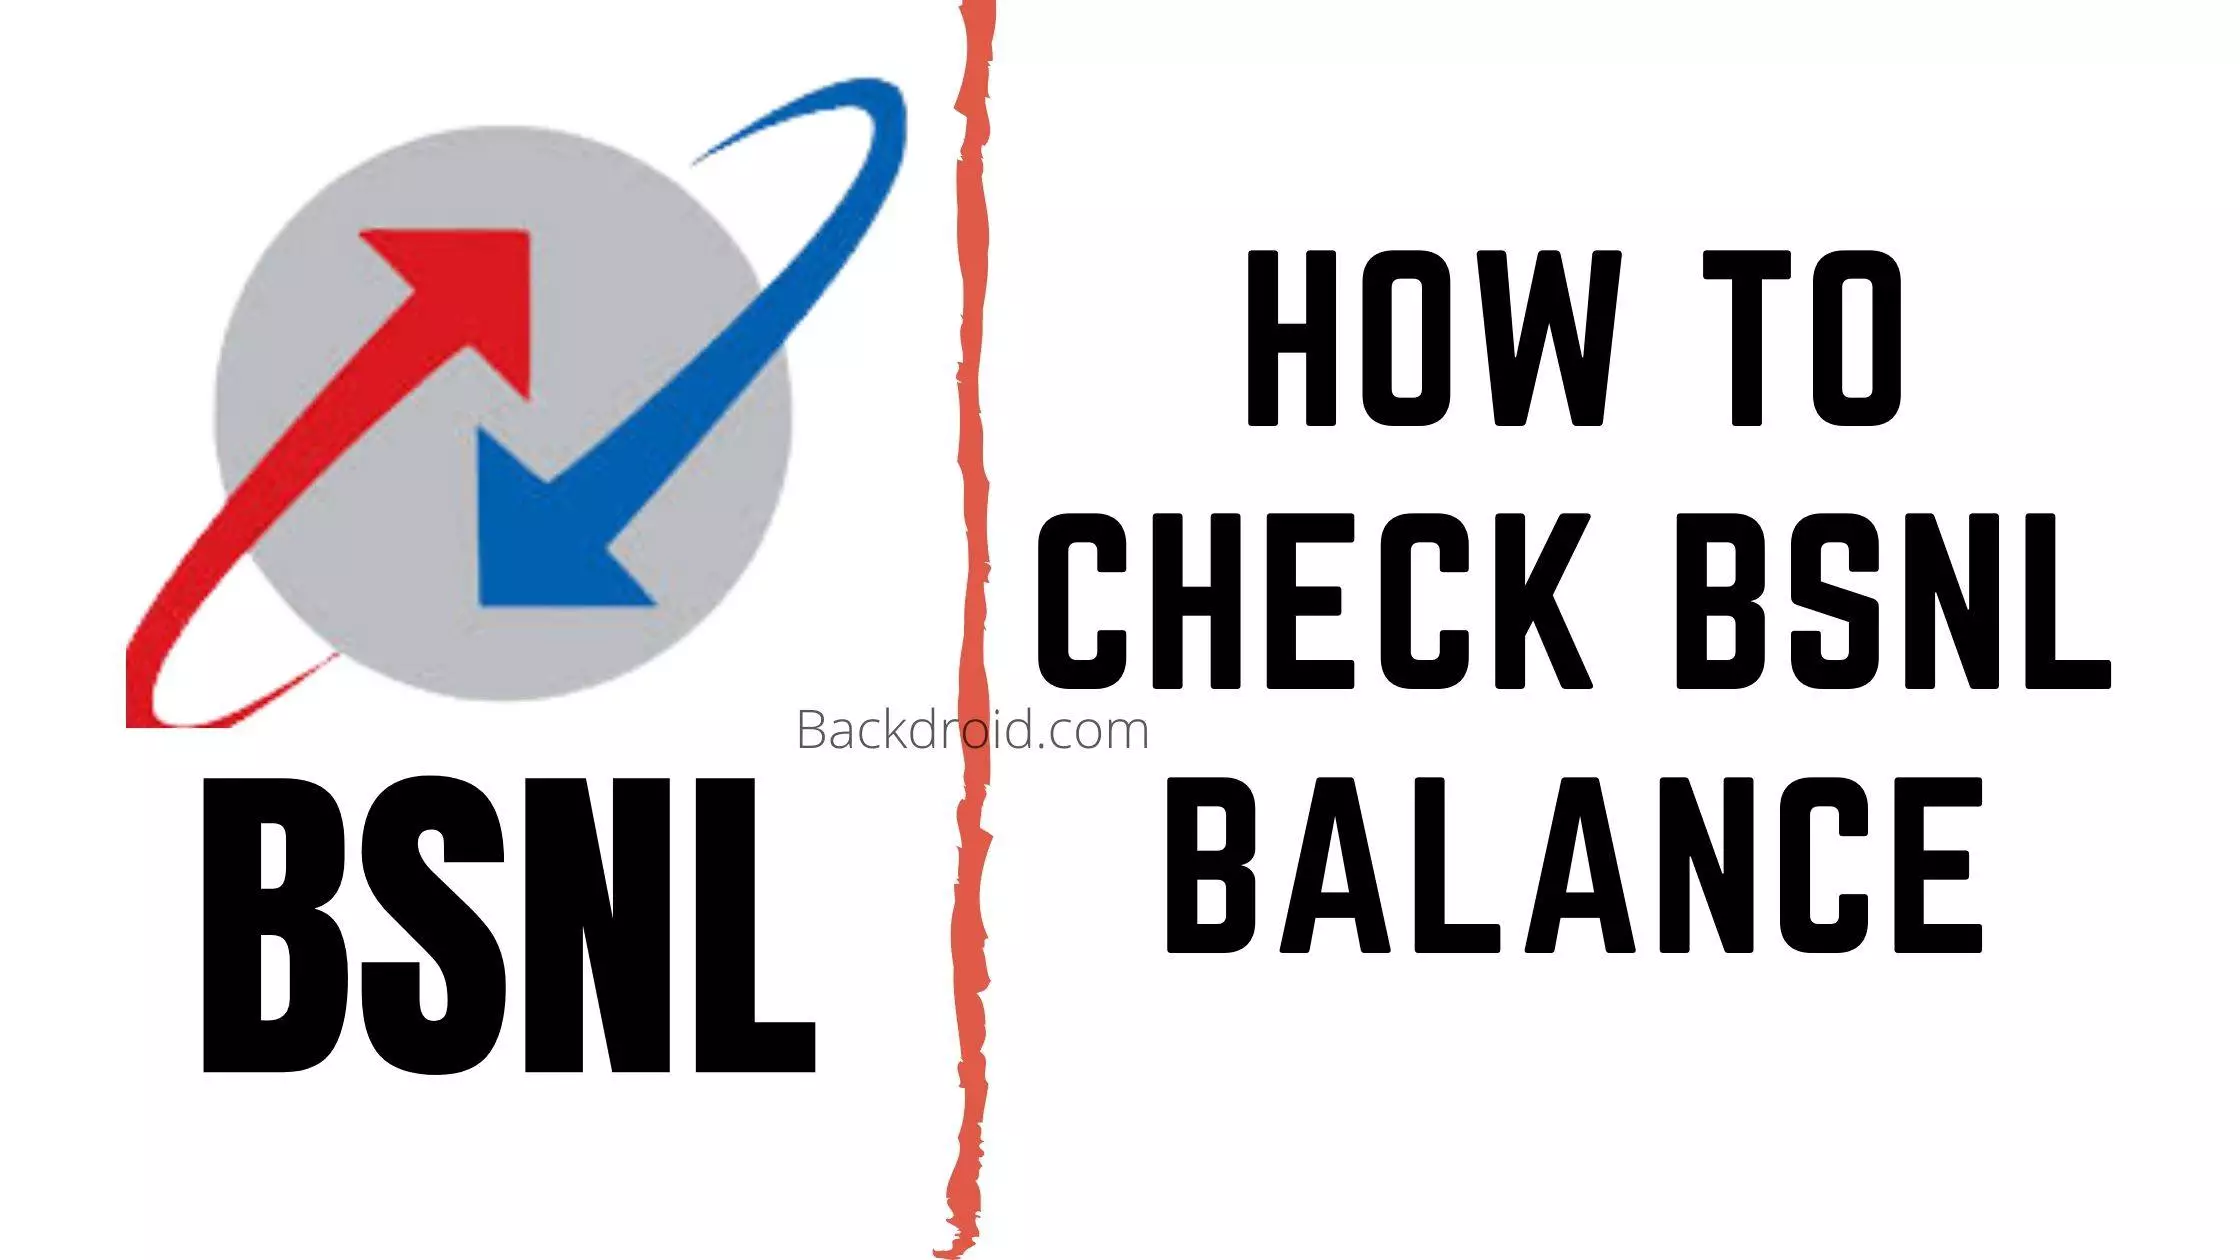 BSNL Balance Check: How to check bsnl balance